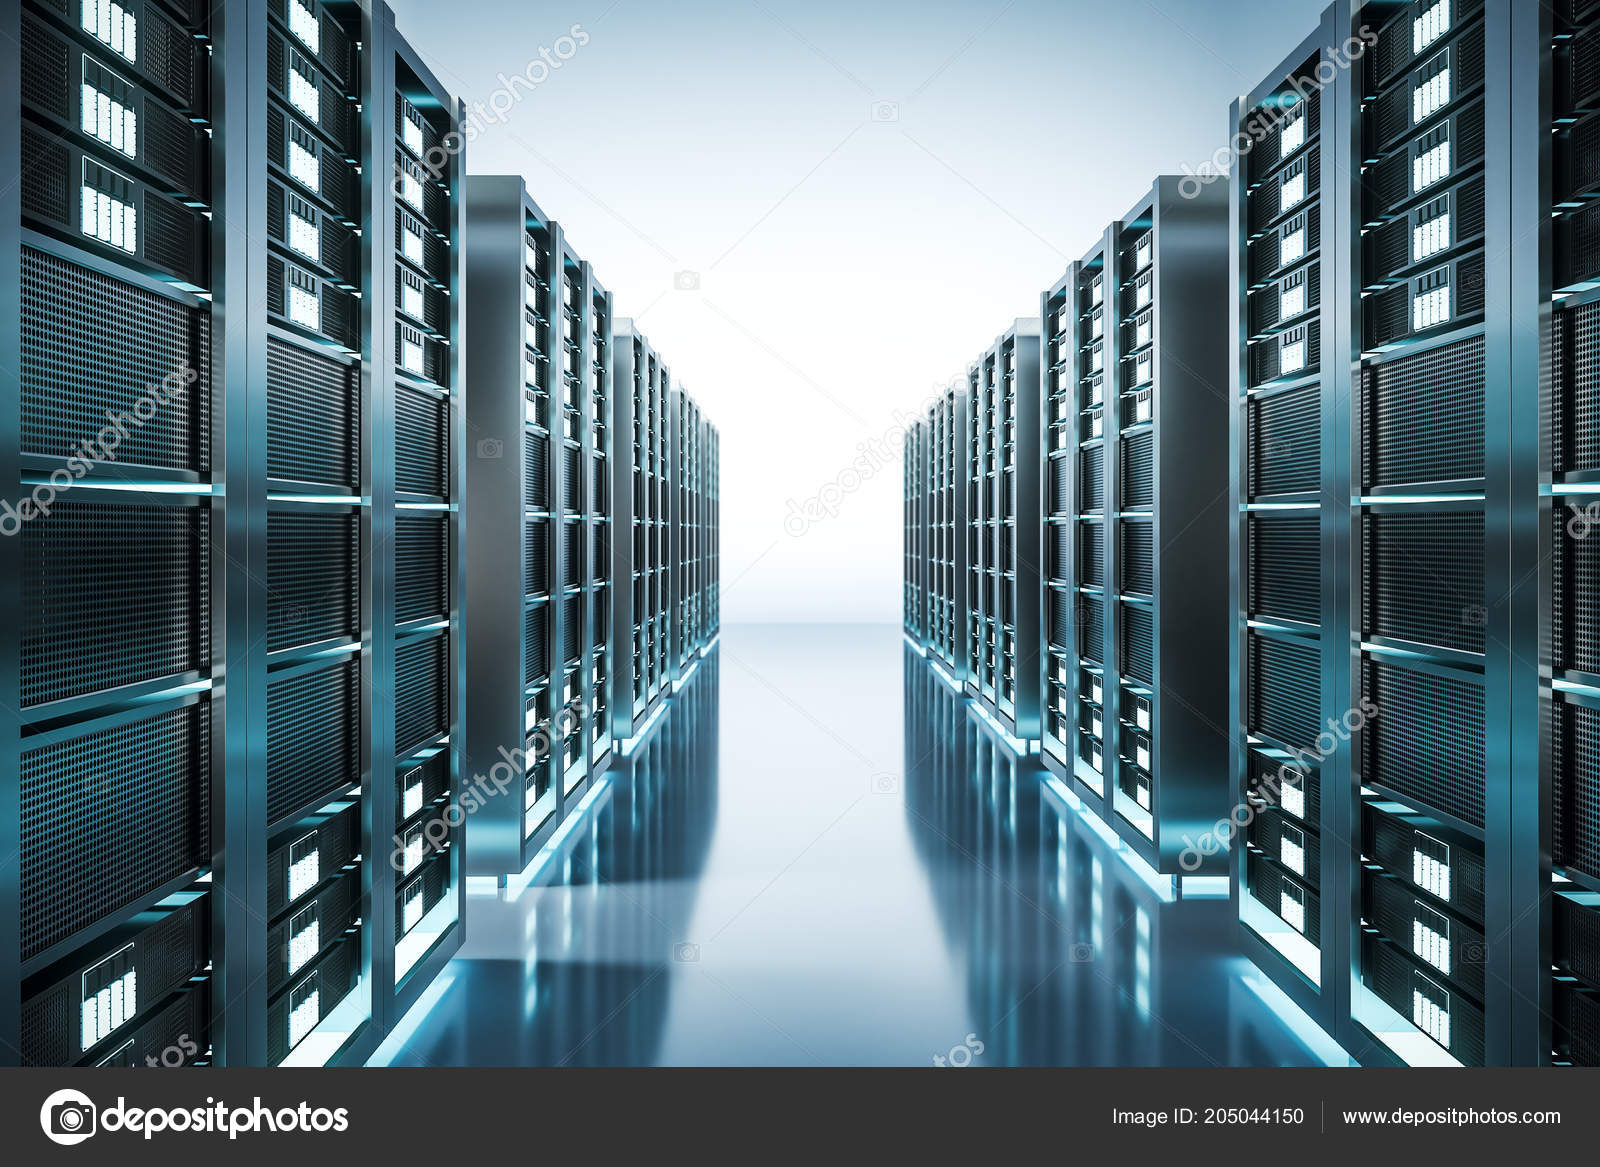 Abstract shiny server room wallpaper technology software concept rendering stock photo by peshkova